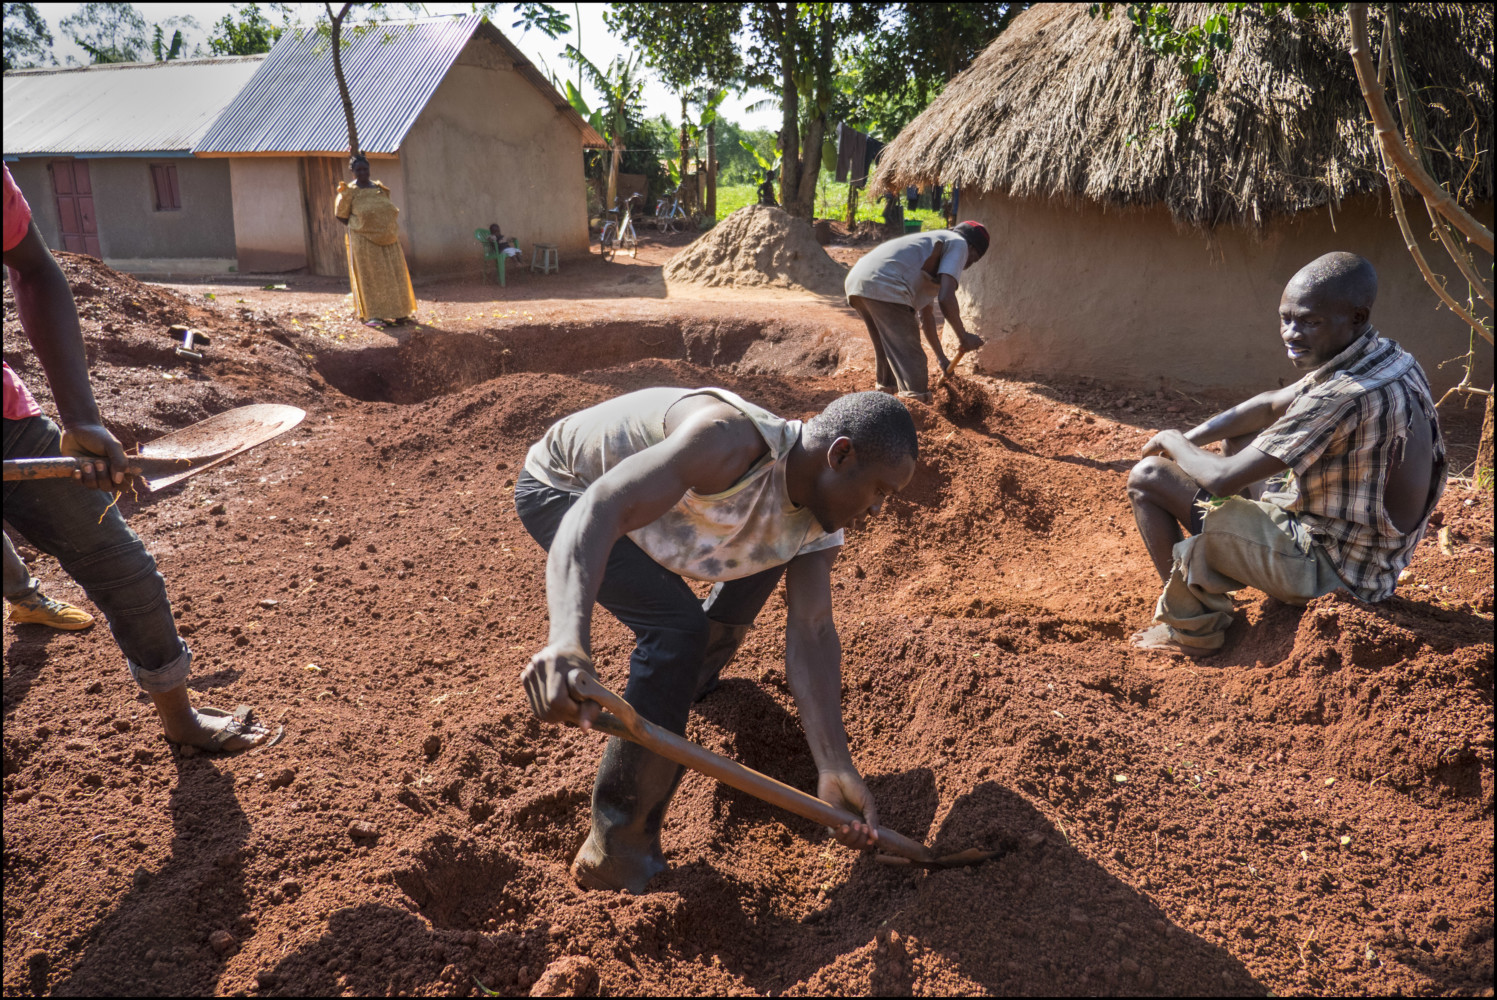 Village работа. Детский труд на плантациях какао. Детский труд на плантациях какао бобов. Детский труд шахта Африка. Уганда Африка золотодобыча.